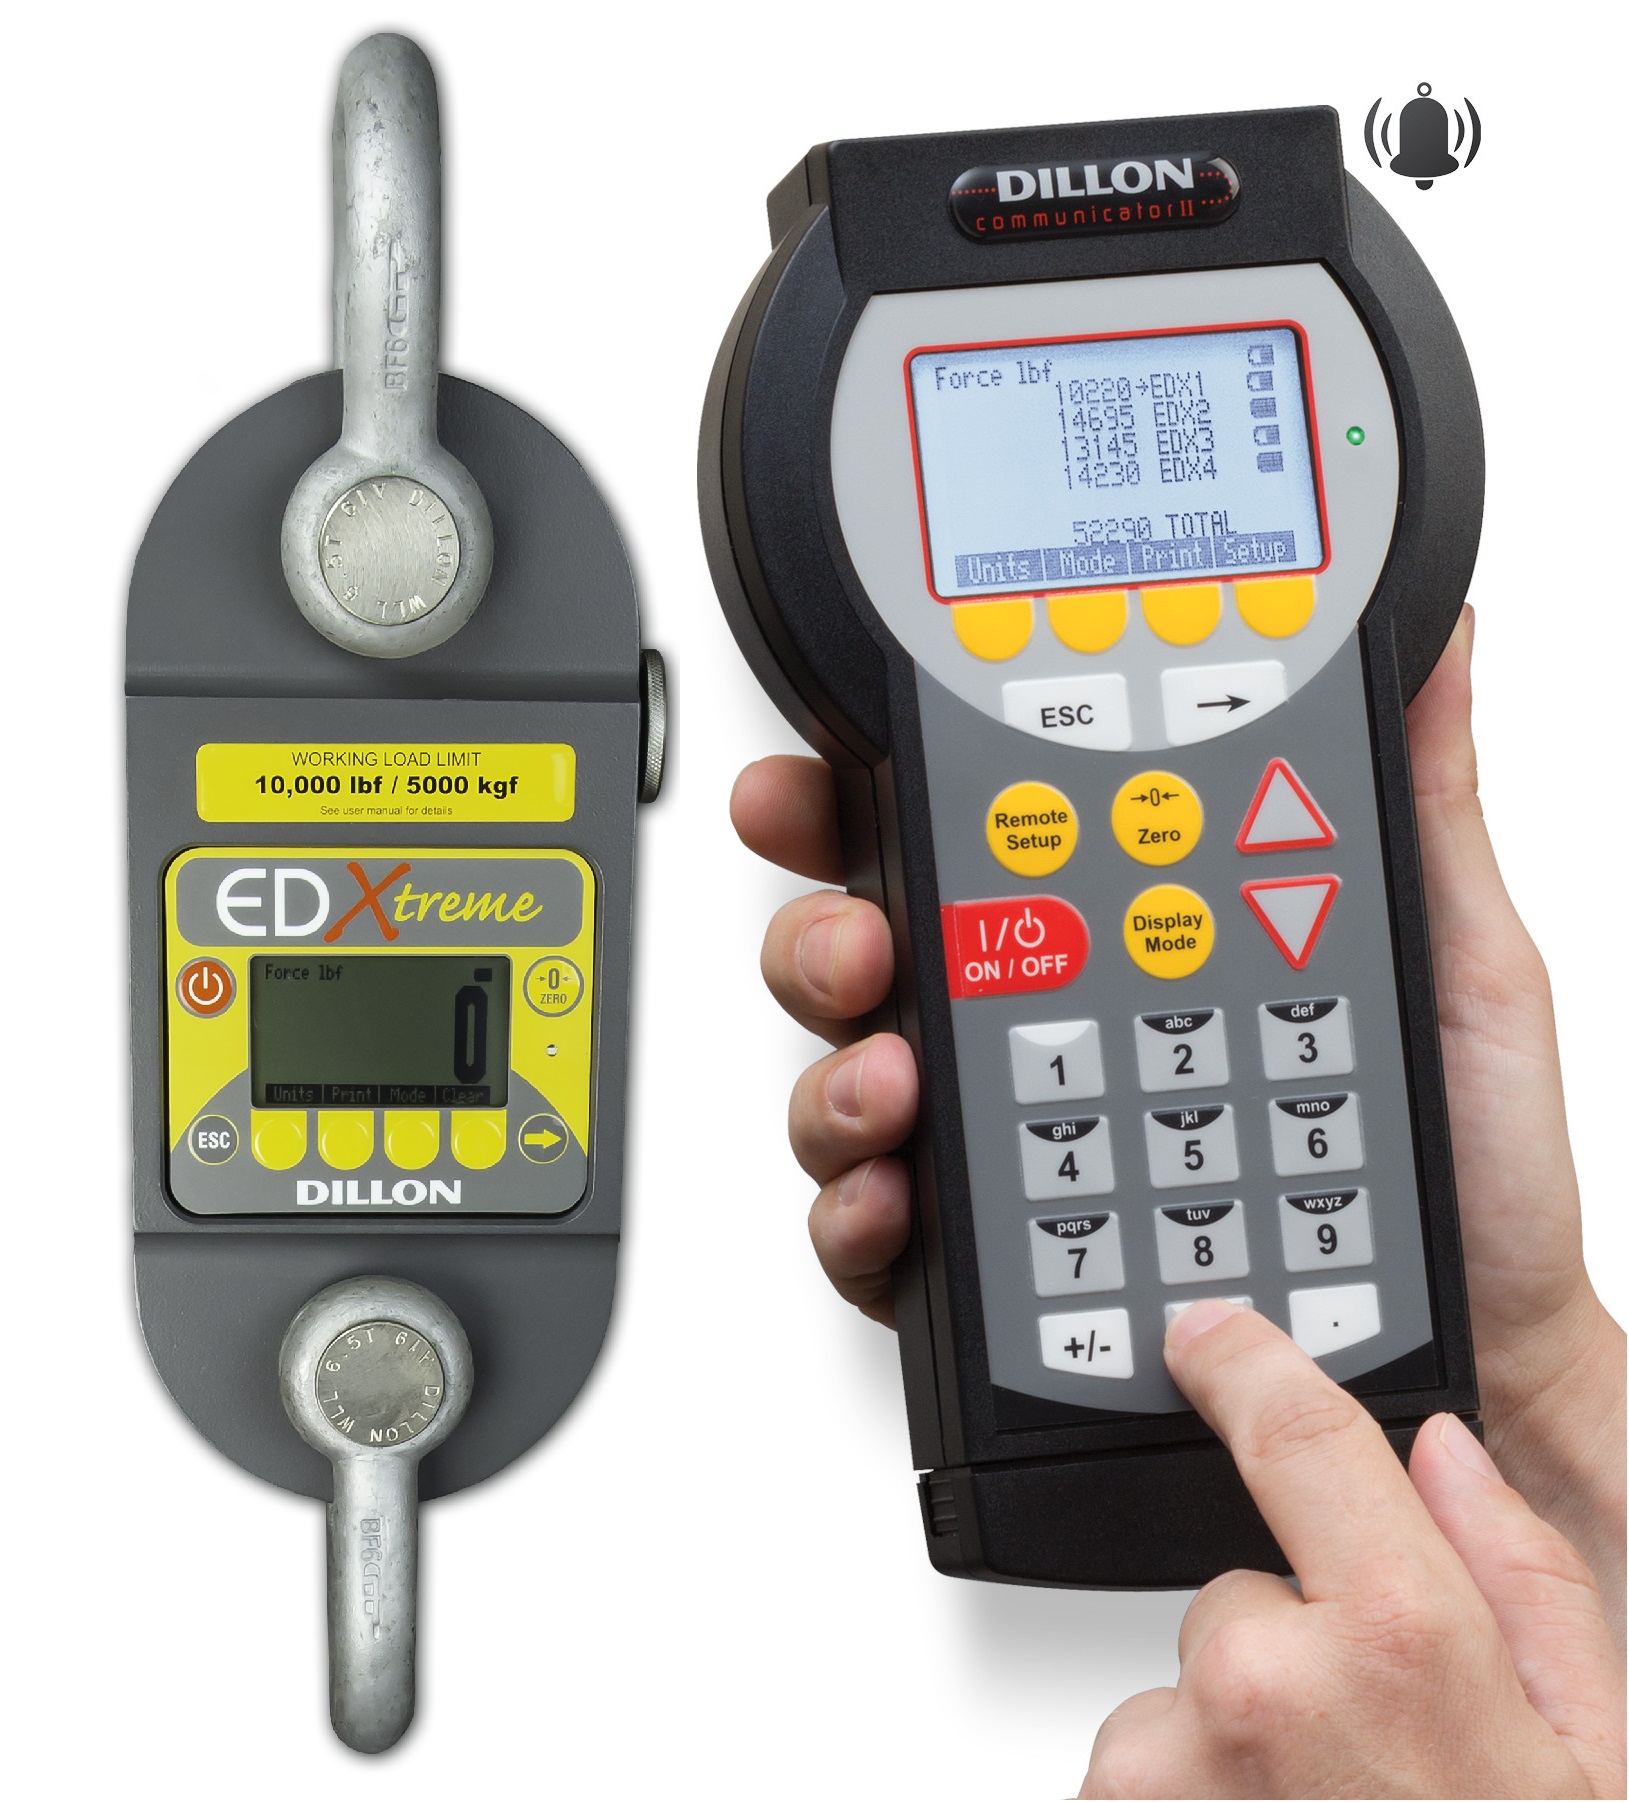 edxtreme dynamometer & dillon communicator hand alarm